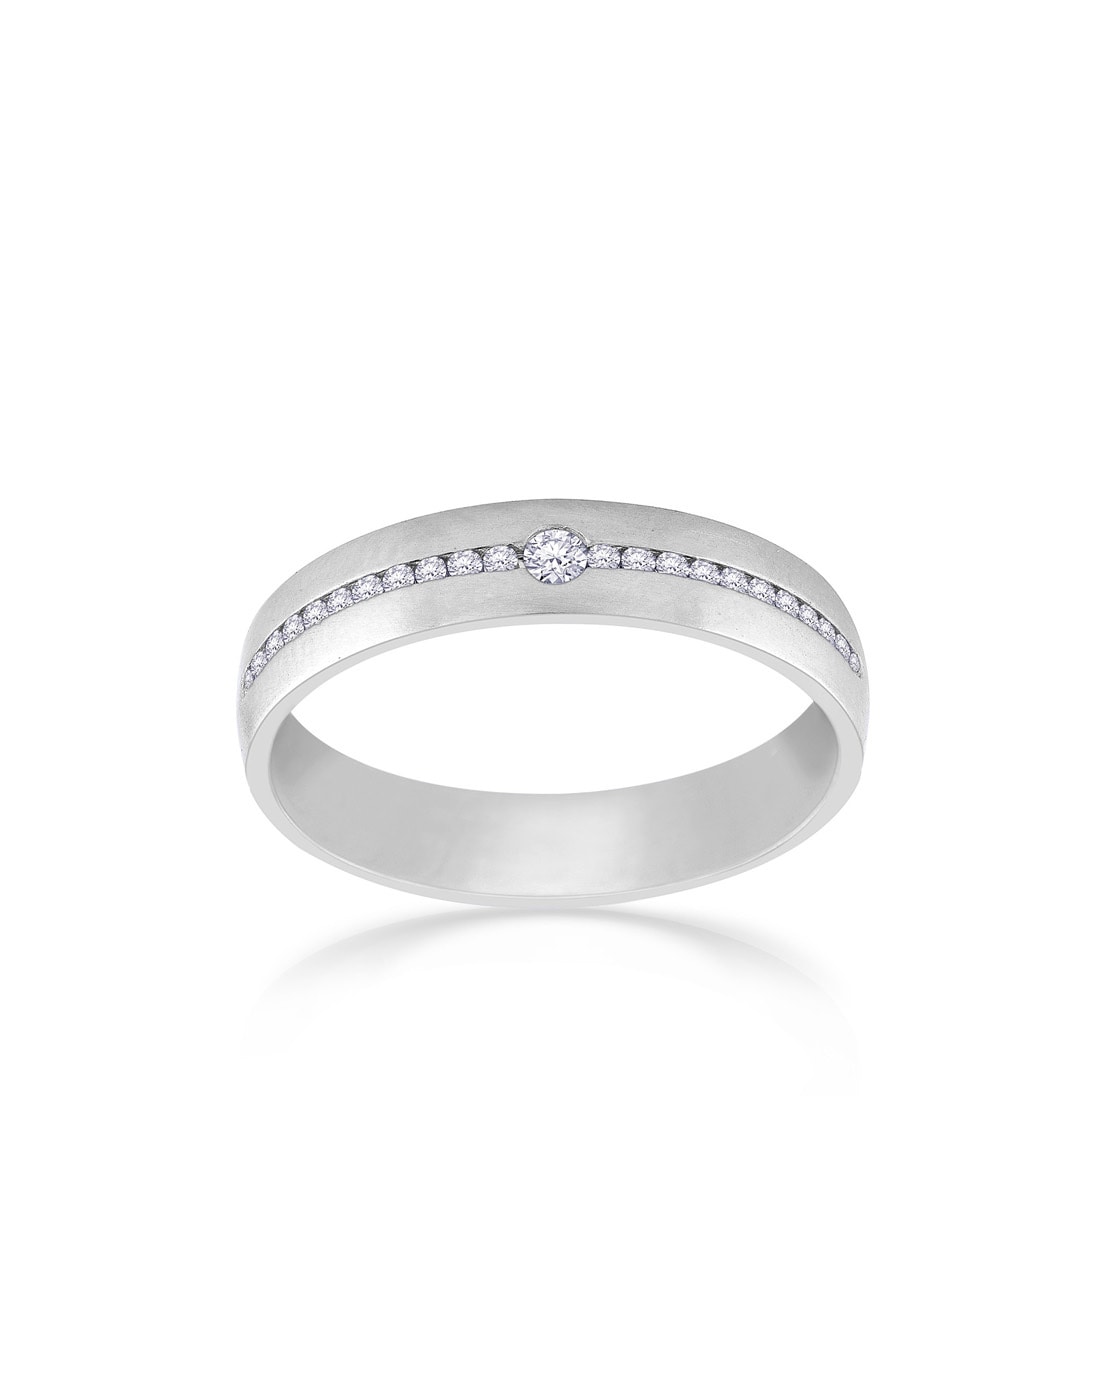 Buy White Rings for Women by Malabar Gold & Diamonds Online | Ajio.com